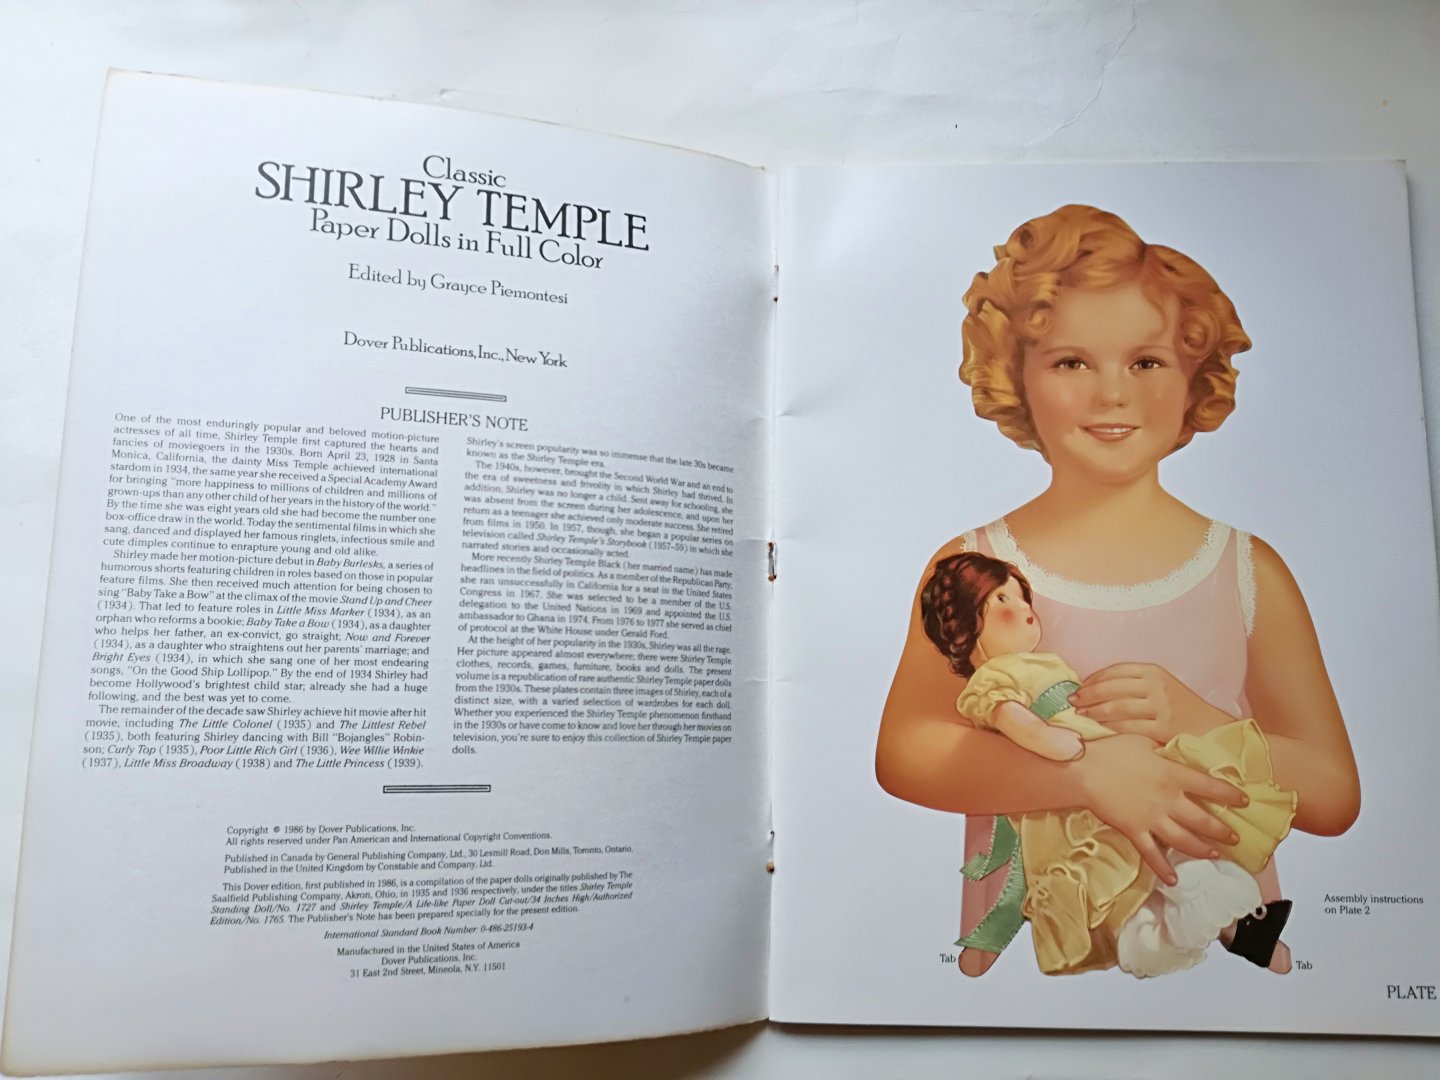 Piemontesi, Grayce - Classic Shirley Temple Paper Dolls